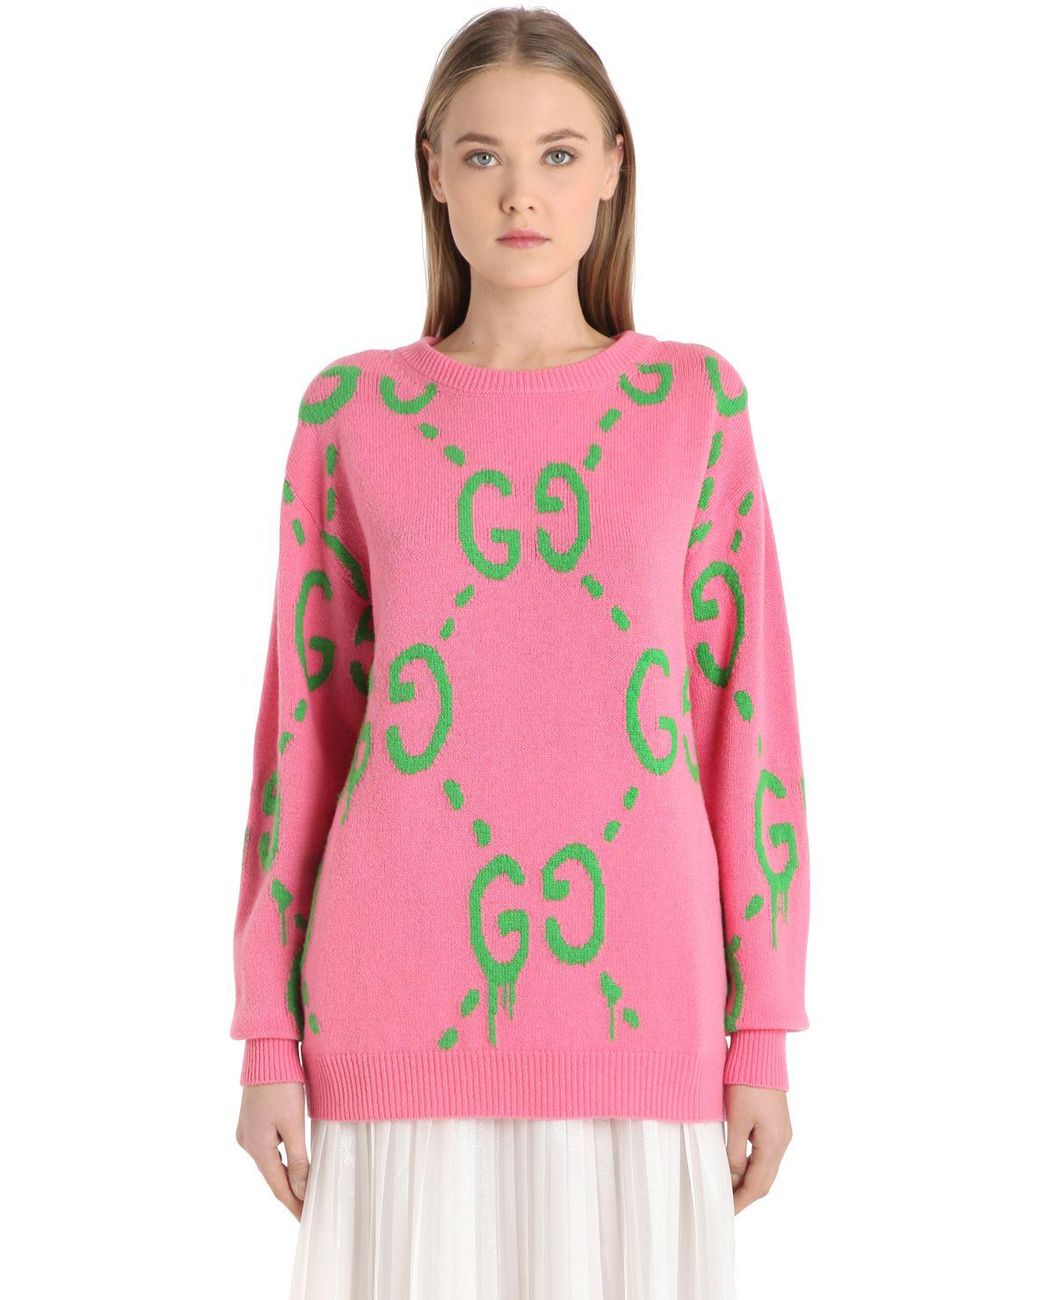 Gucci Intarsia Gg Logo Wool Sweater in Pink | Lyst UK